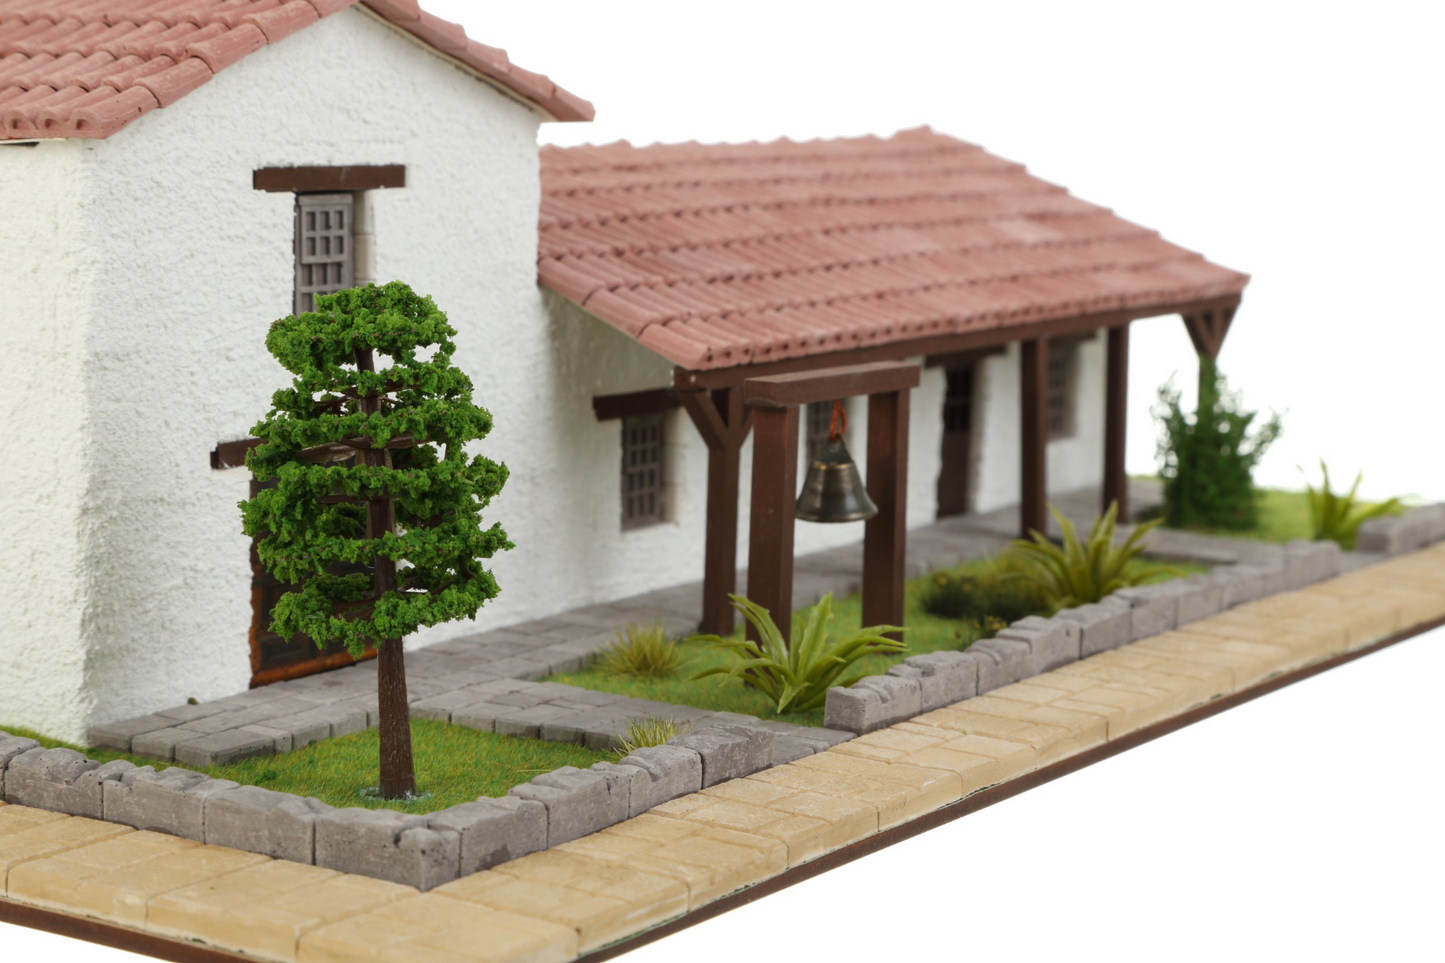 Mini bricks constructor set - Mission San Francisco Solano